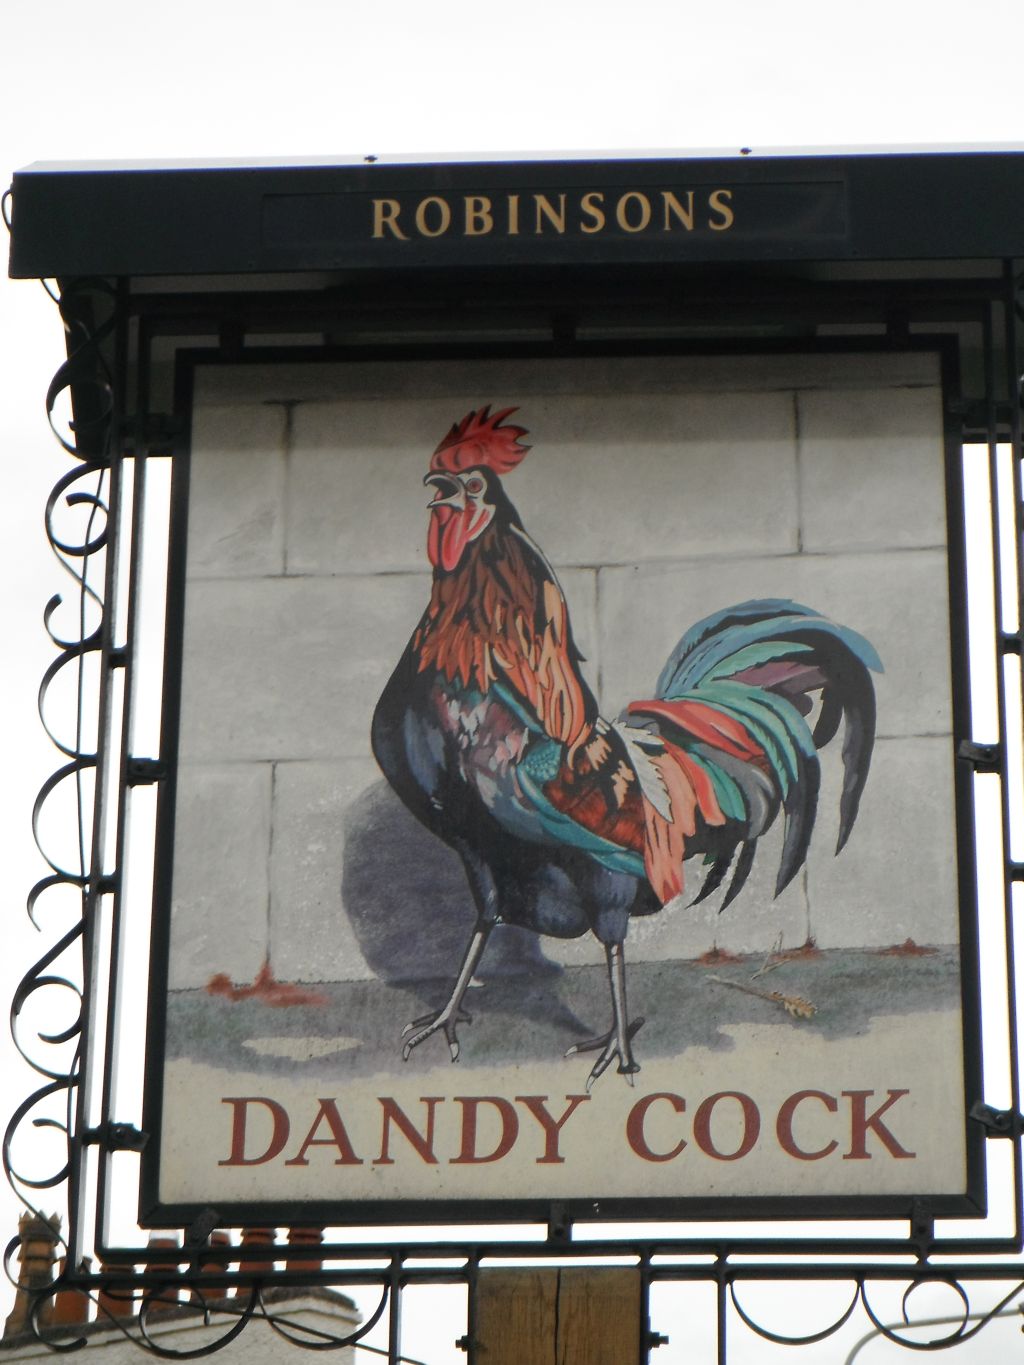 Pub Sign  – The Dandy Cock, Disley, Derbyshire - taken by me 